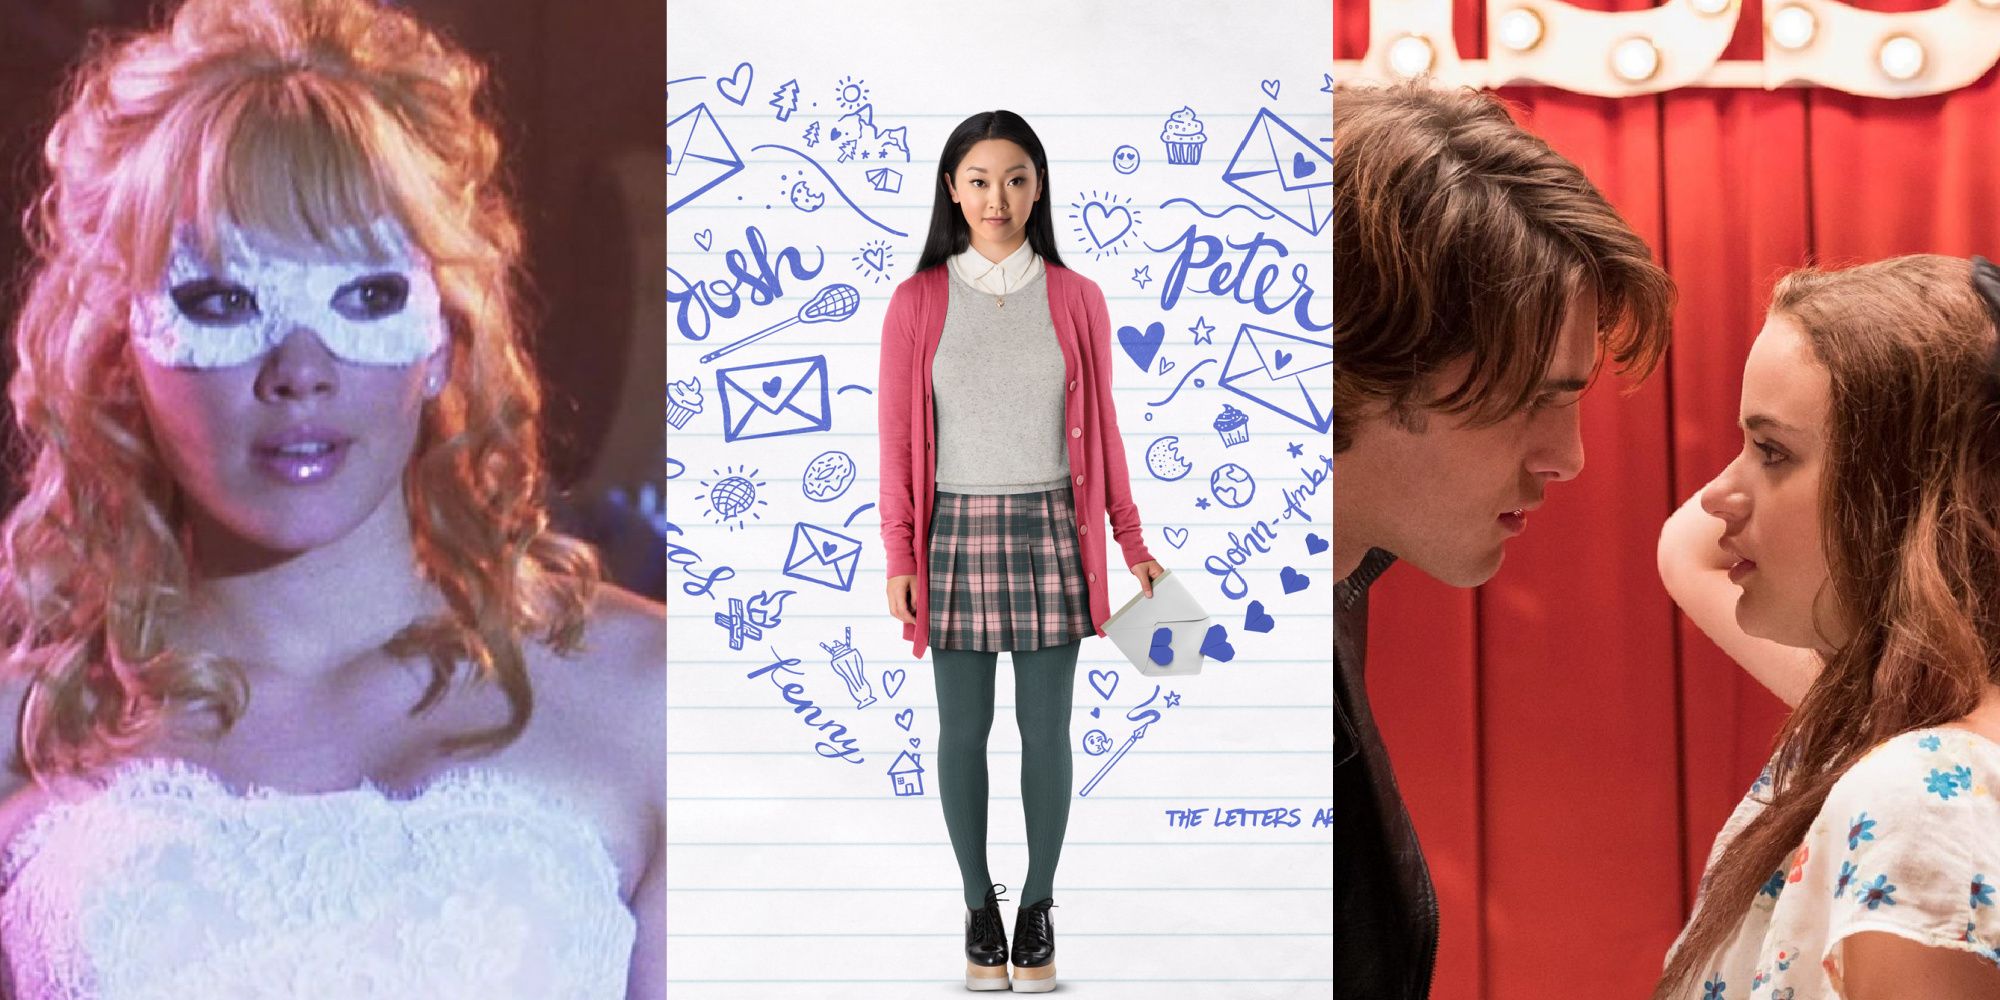 10 Best Romantic Comedies On Netflix, According To Ranker